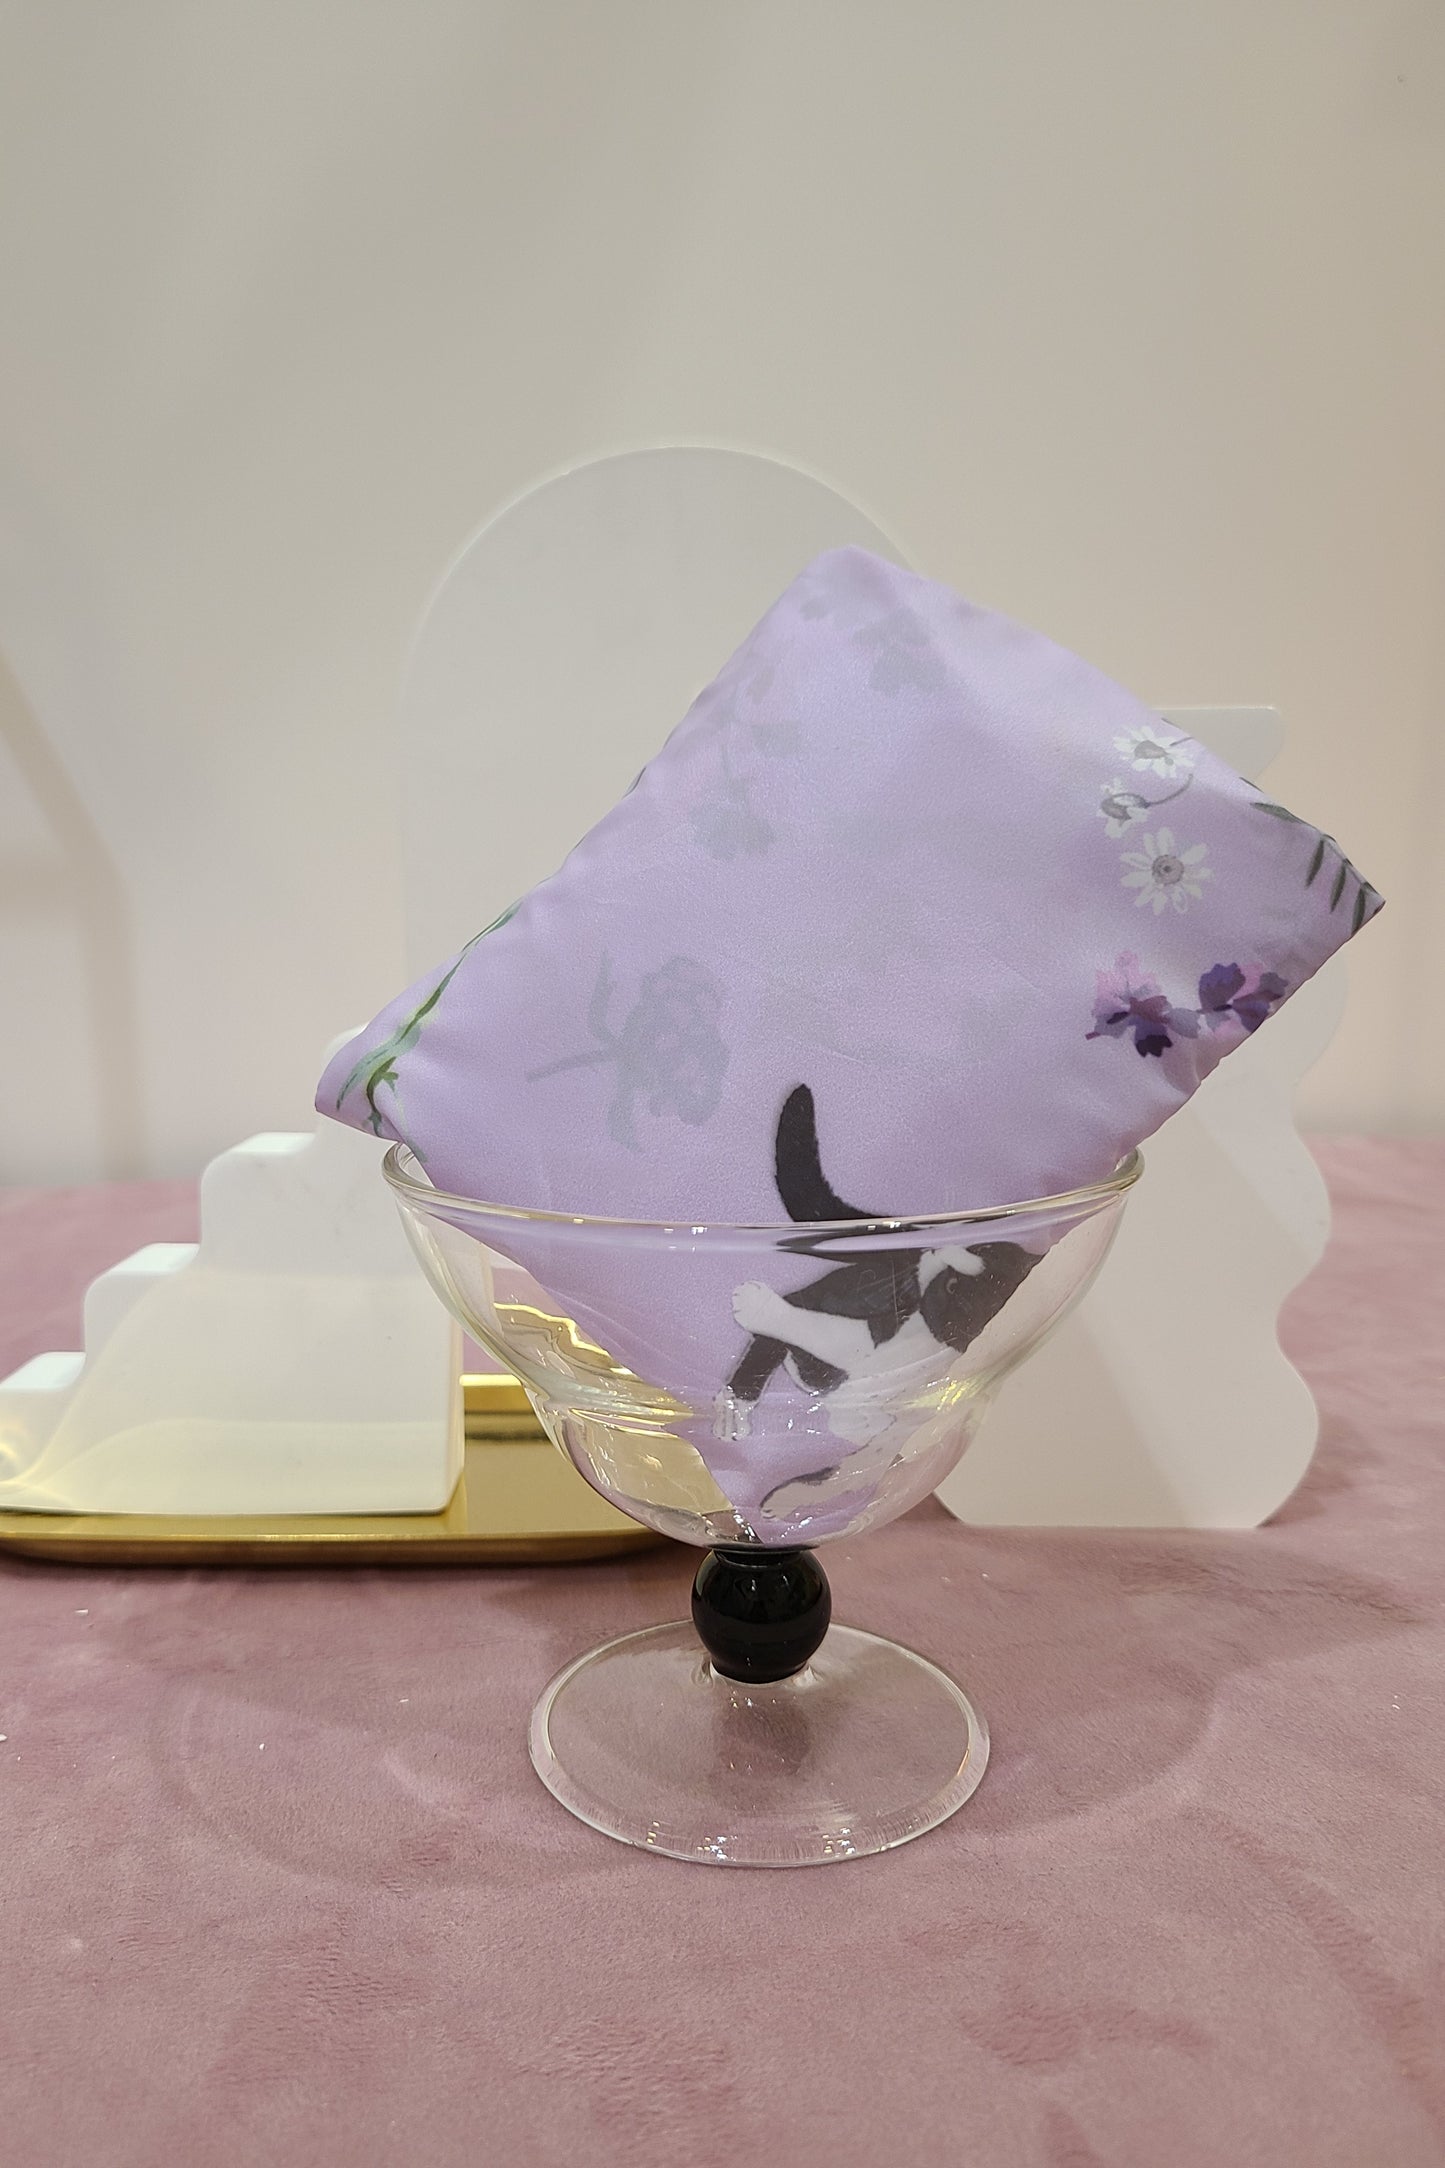 "Yogis Cat and Flower" Purple Wild Flower Field Ultra Light Foldable Eco-Bag, Shopping Bag